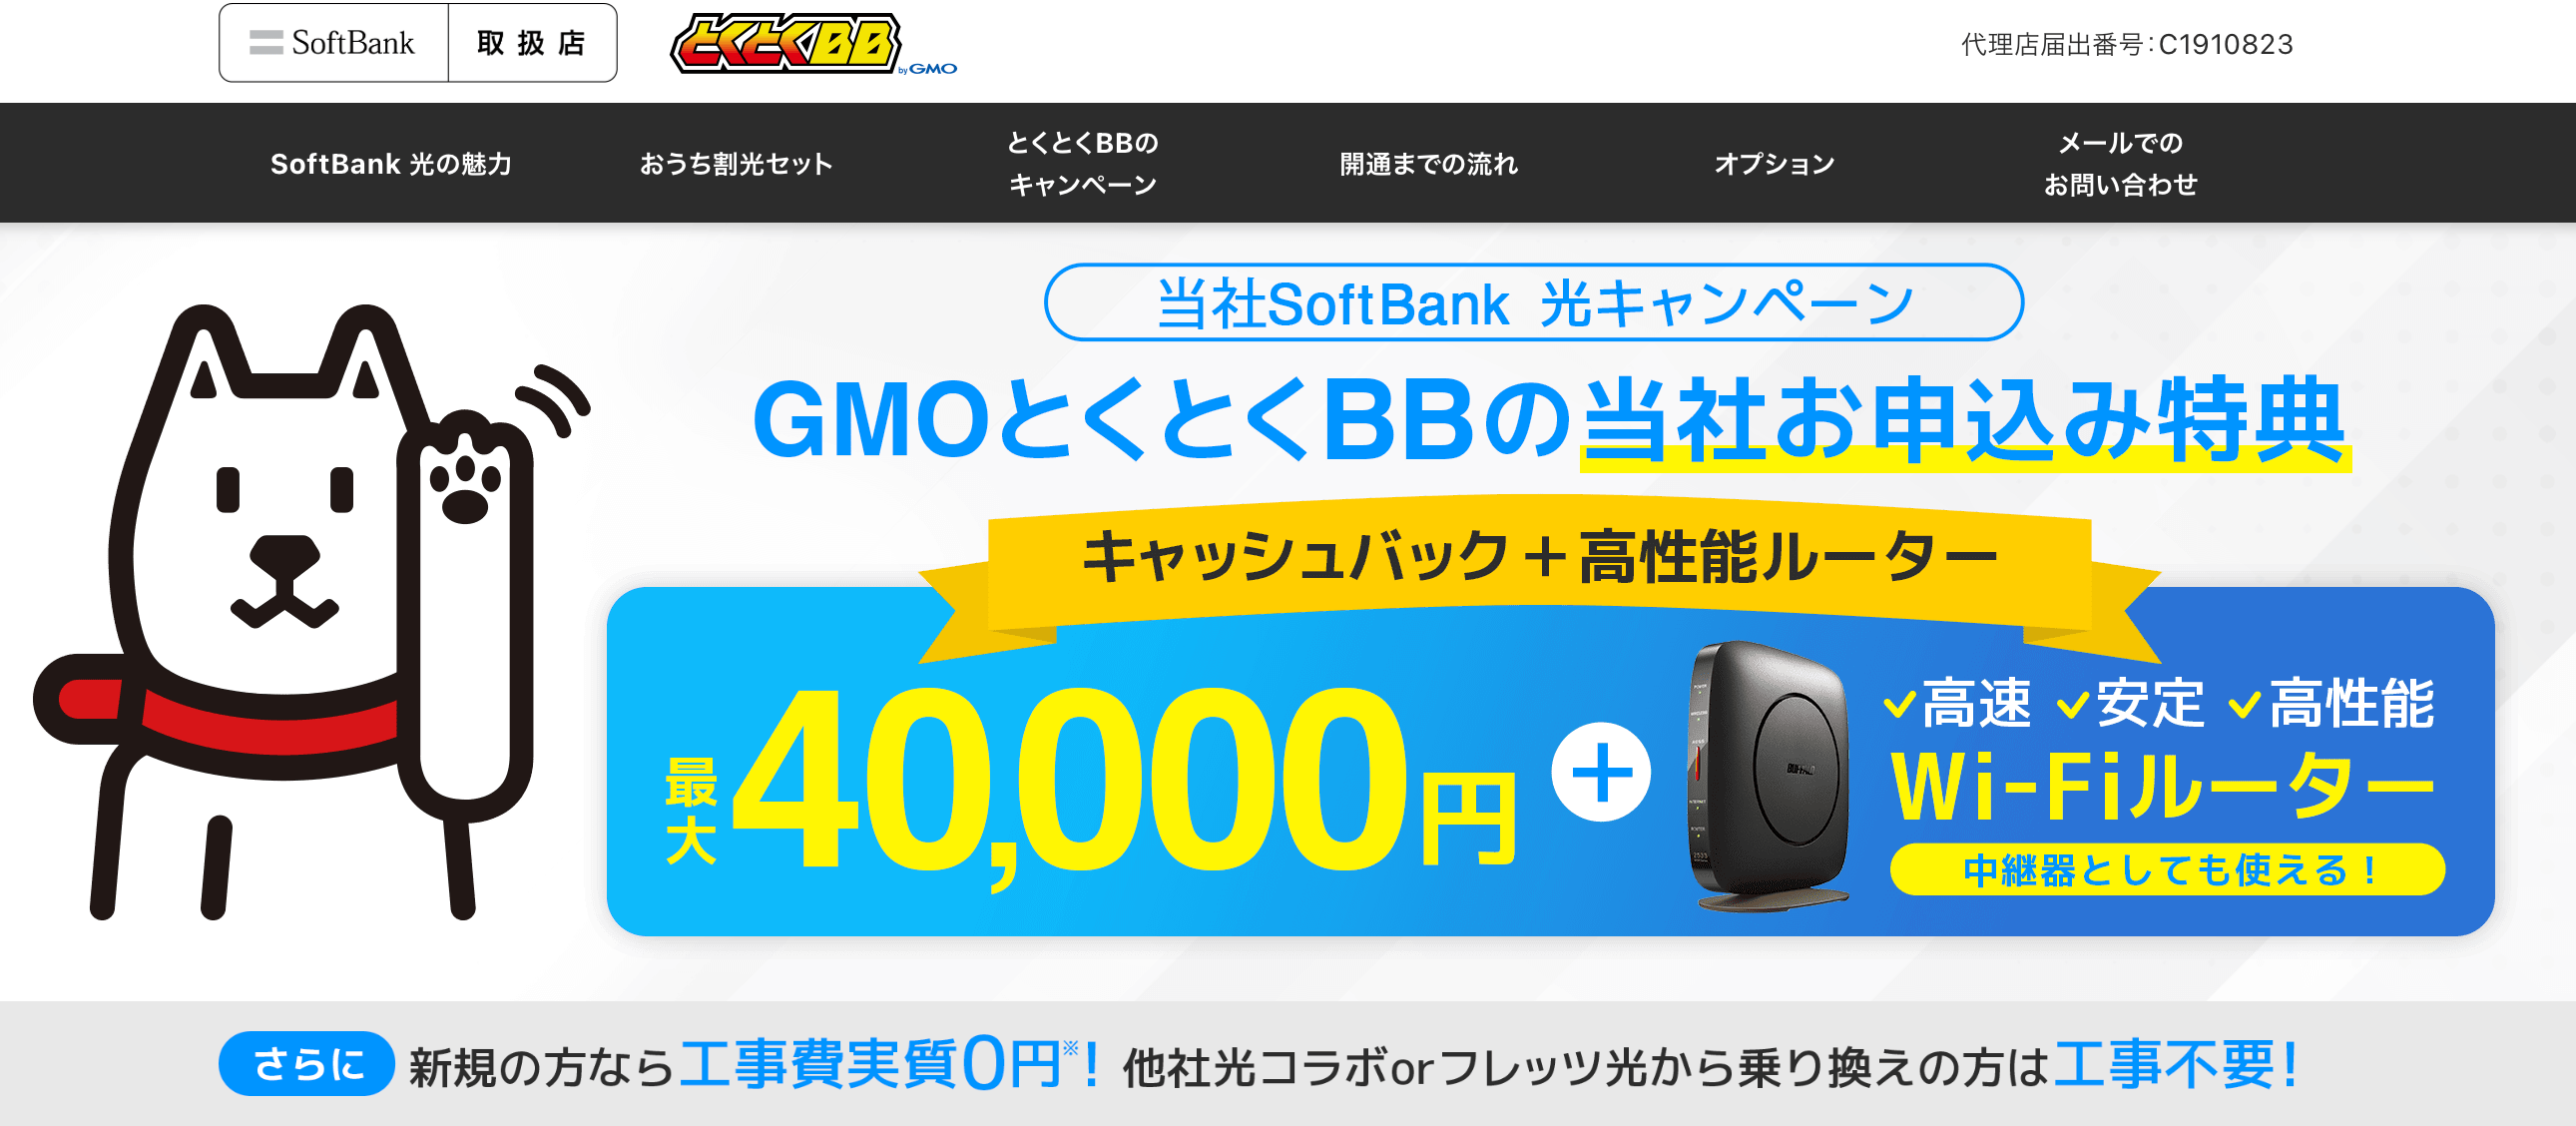 softbank_gmo